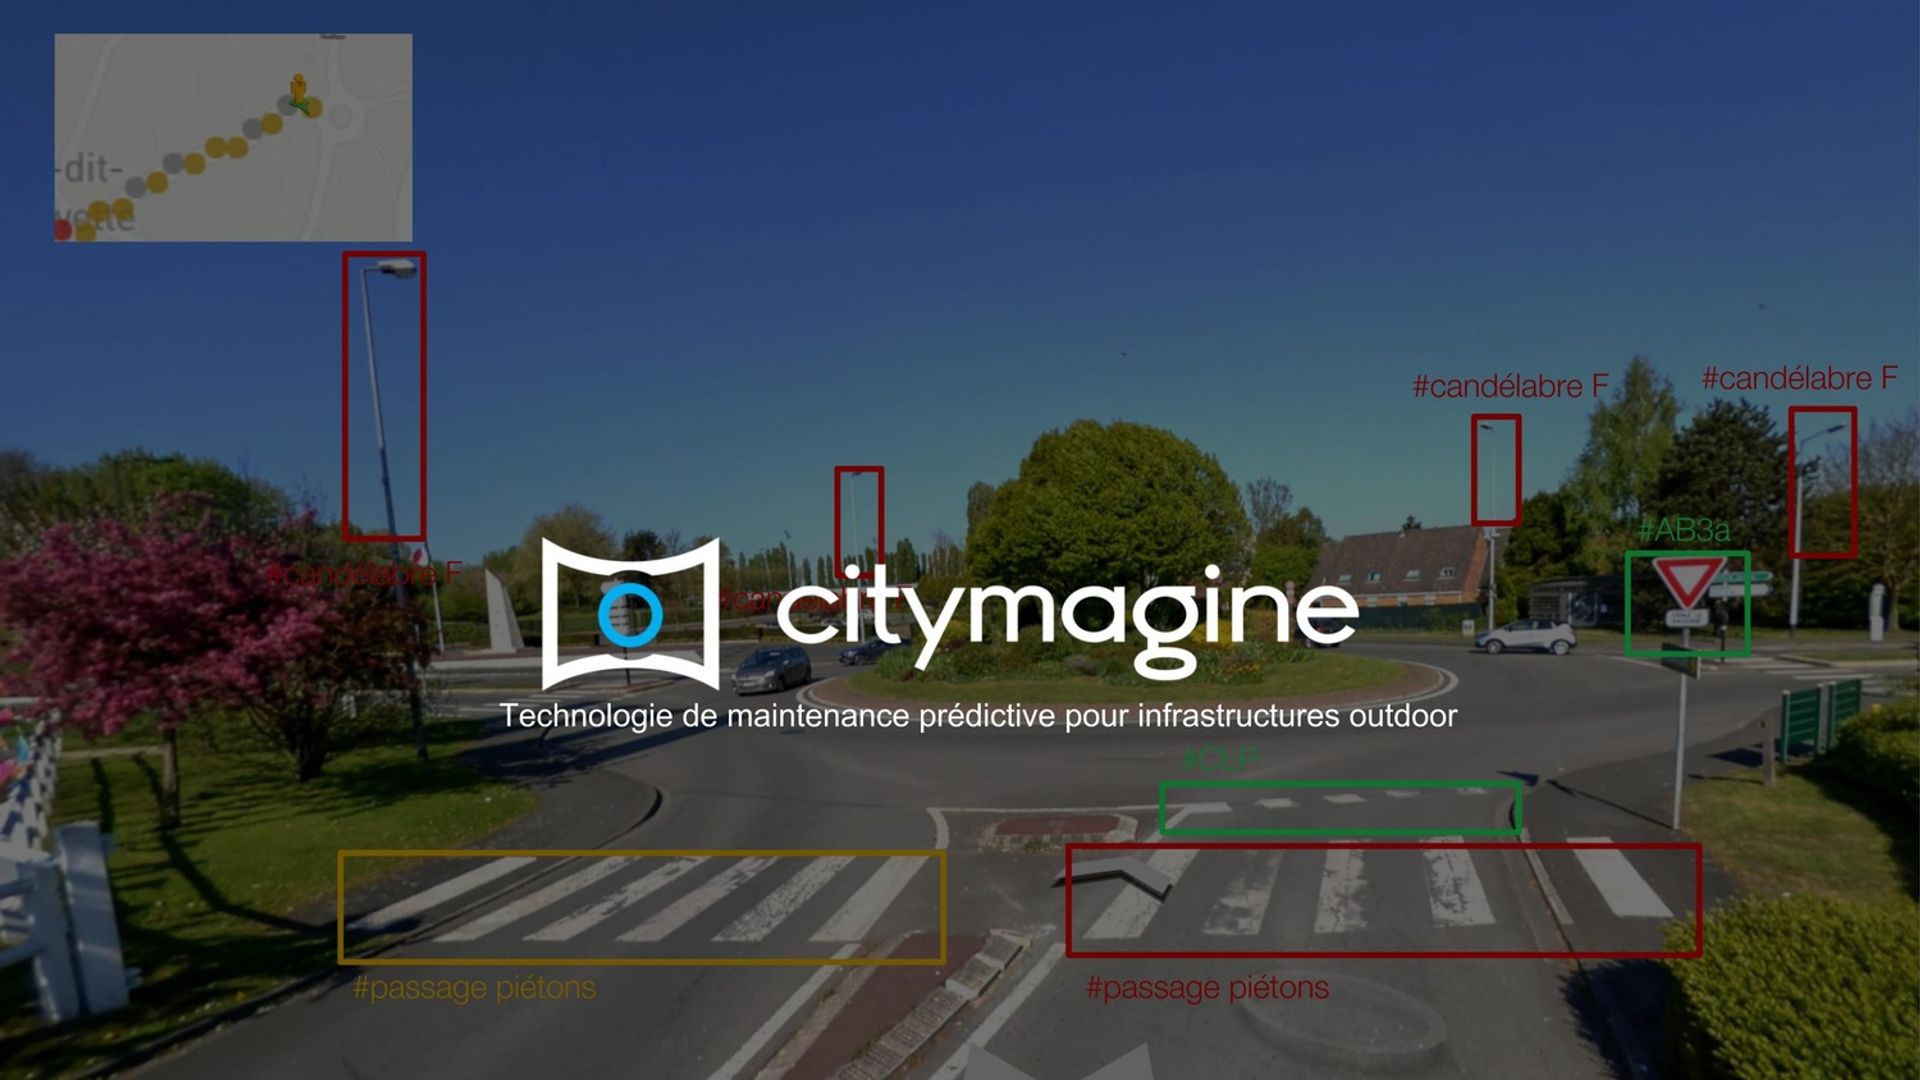 Citymagine